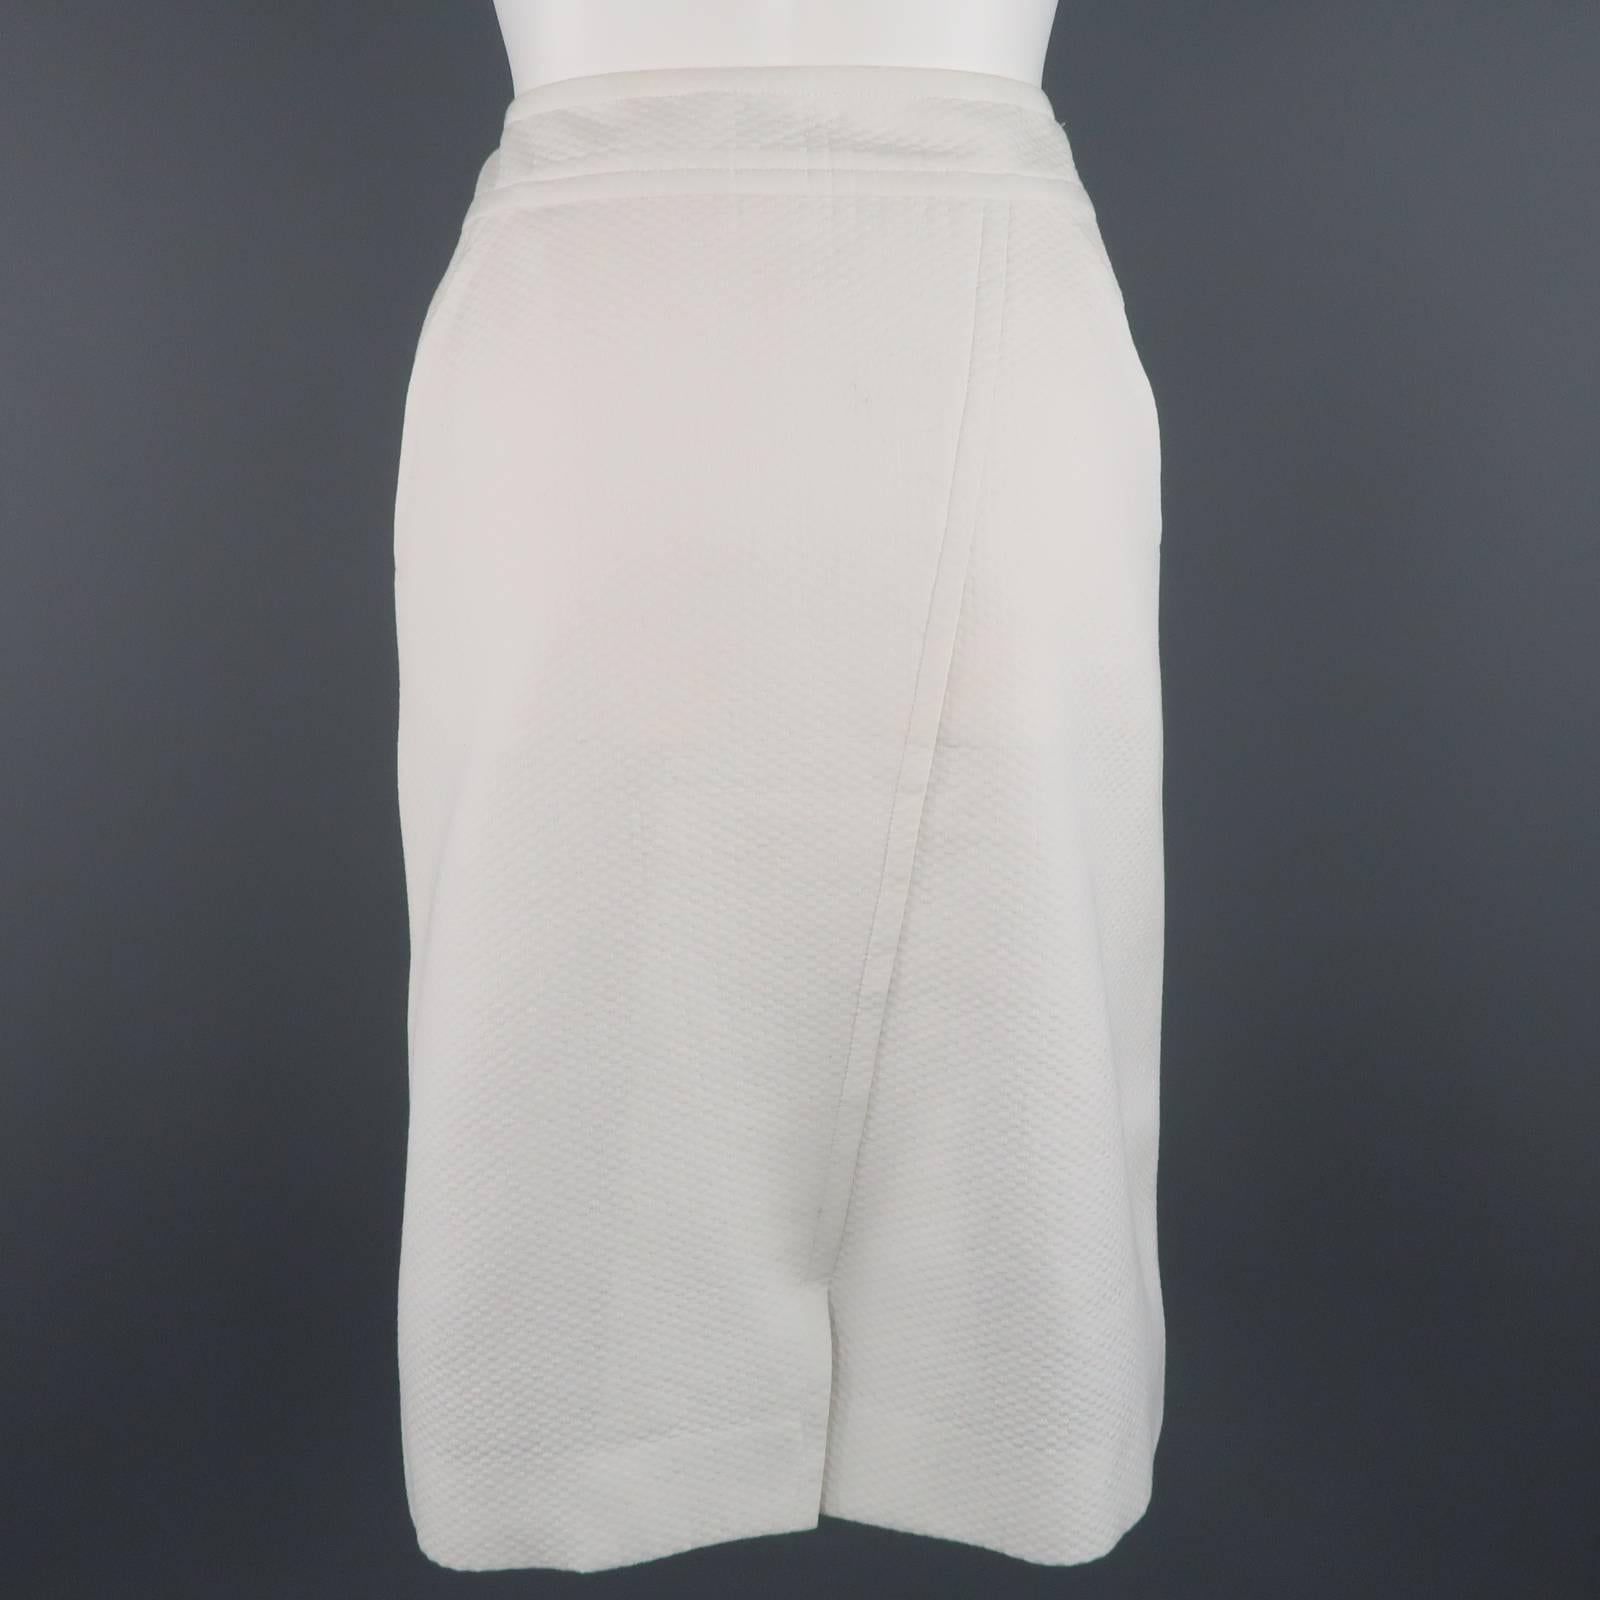 CHANEL Skirt - Size 2 White Cream Textured Cotton Button A-line Skirt 2